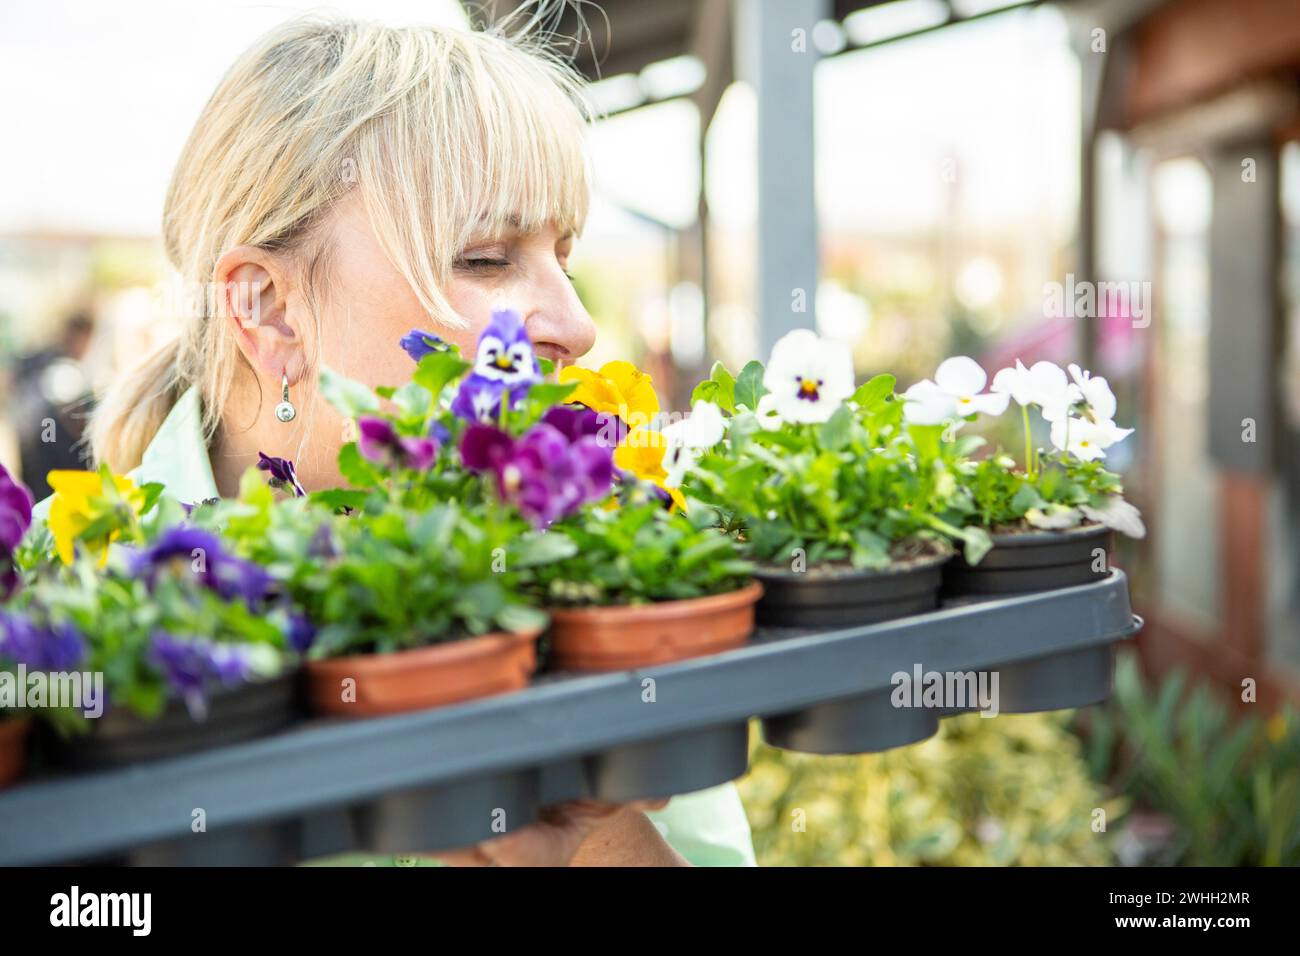 Gardener with flower pots violets Stock Photo